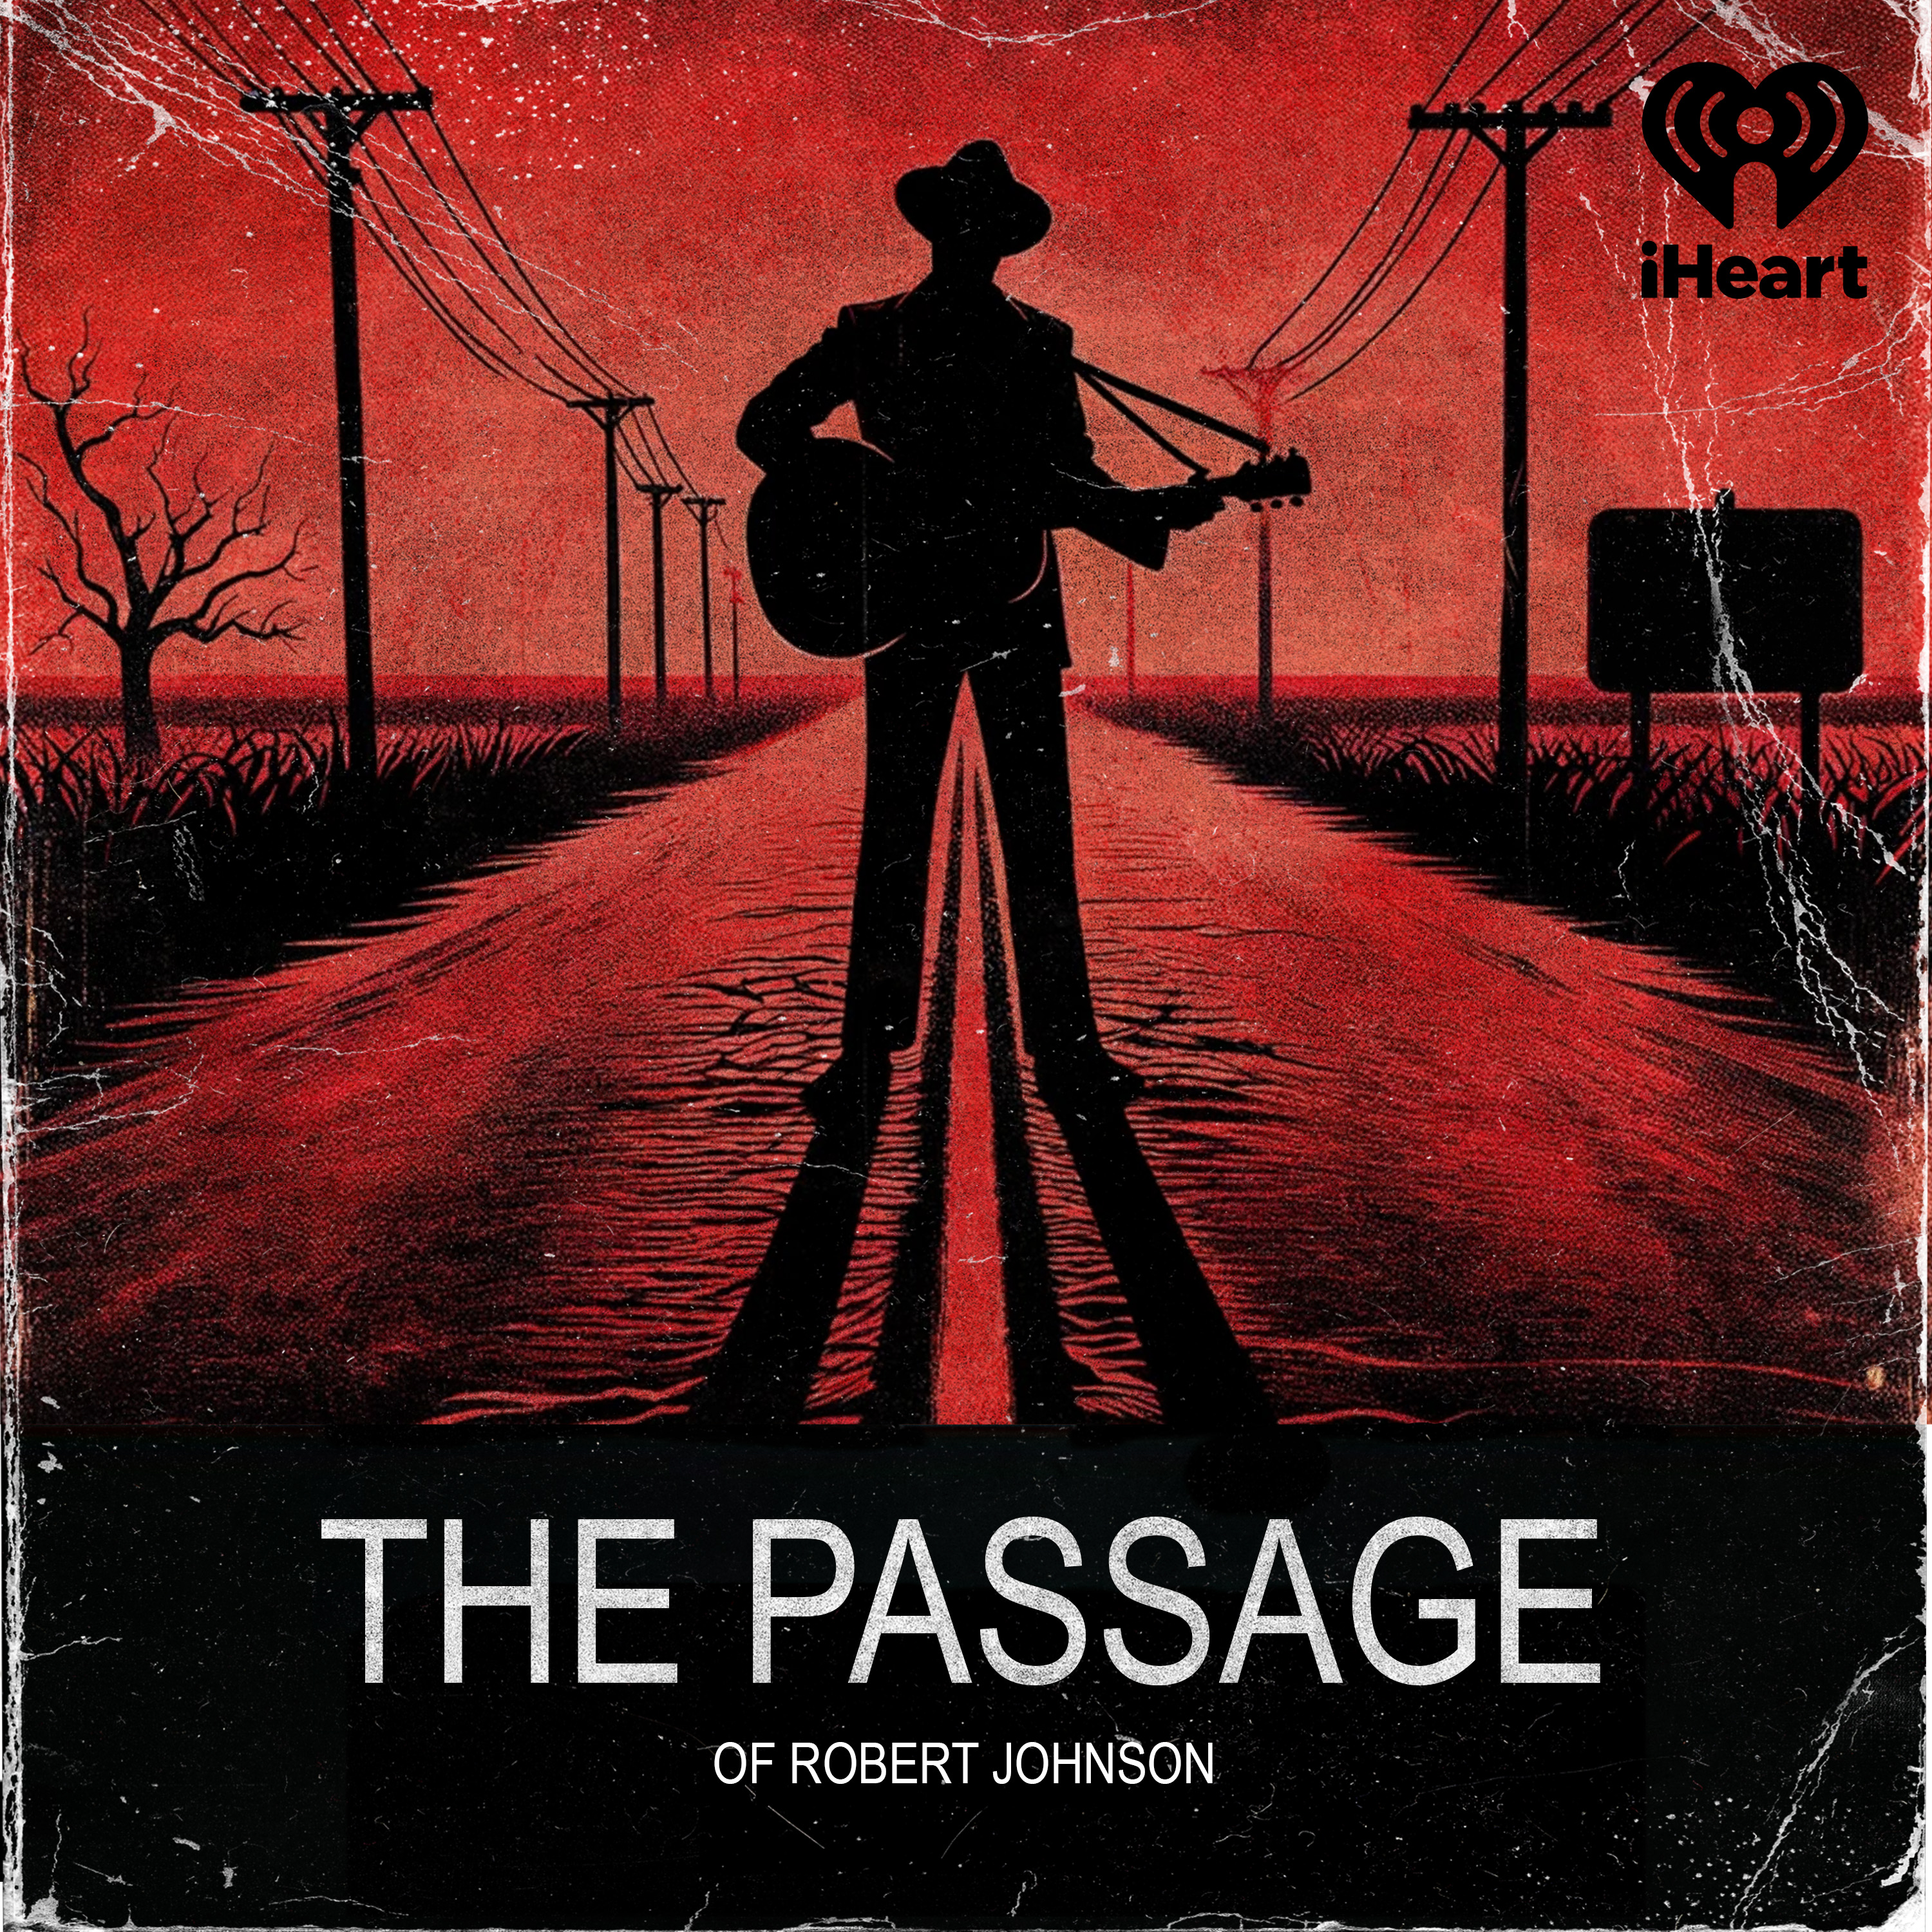 Episode 2: THE PASSAGE OF ROBERT JOHNSON